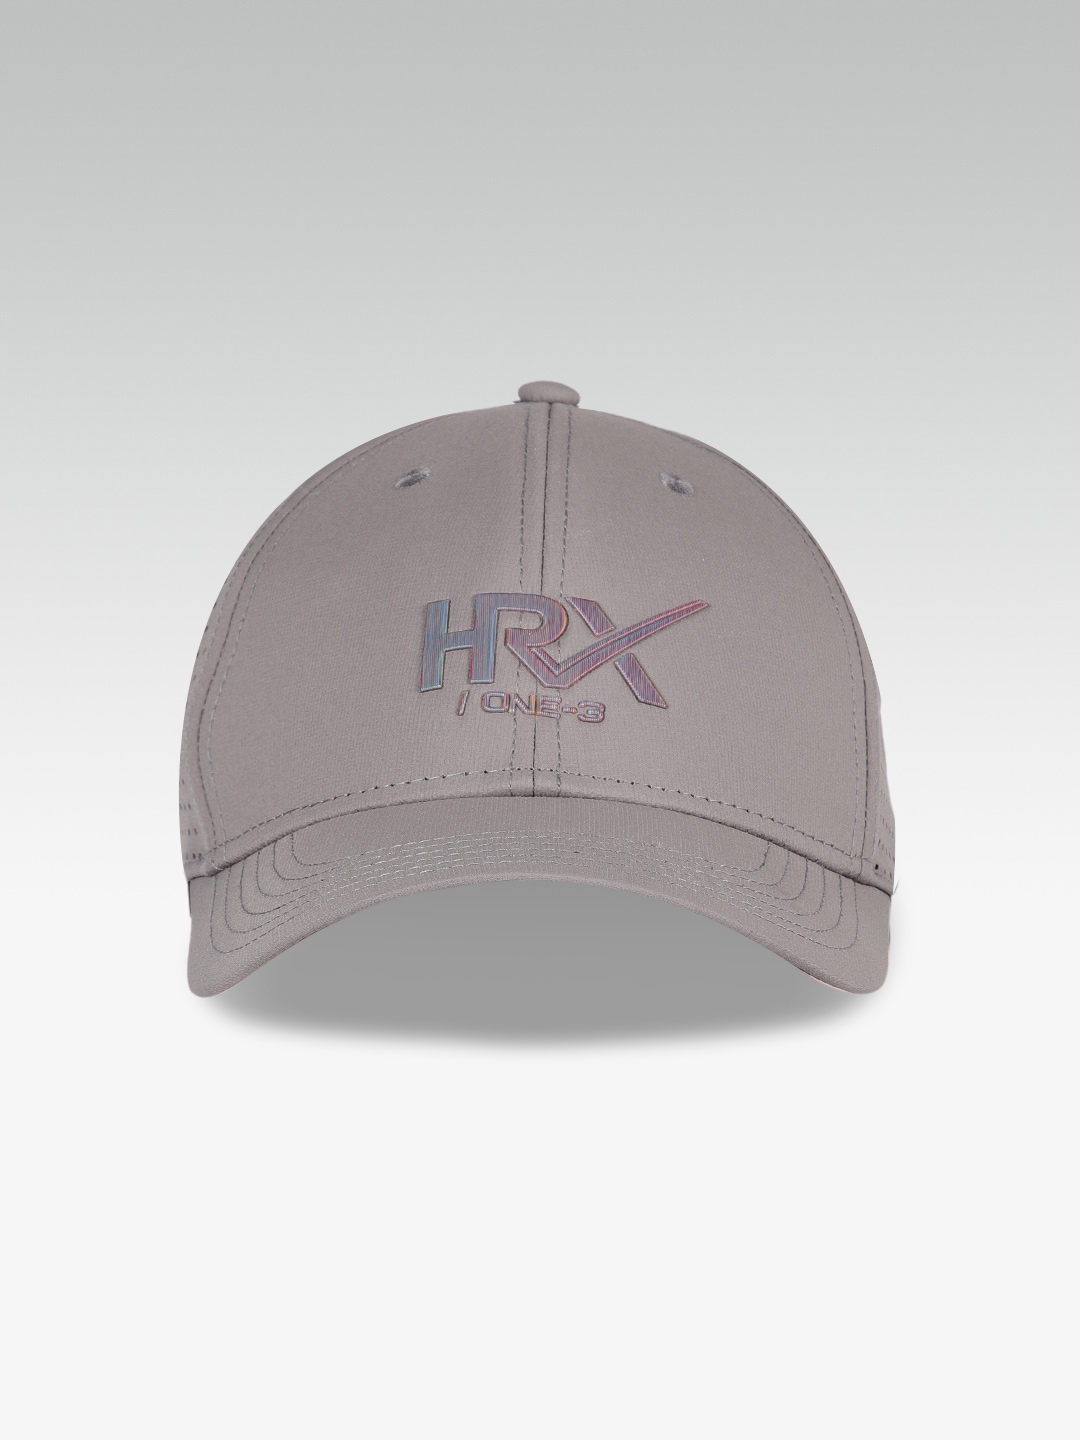 HRX by Hrithik Roshan Unisex Grey Training Holographic print Cap Price in India